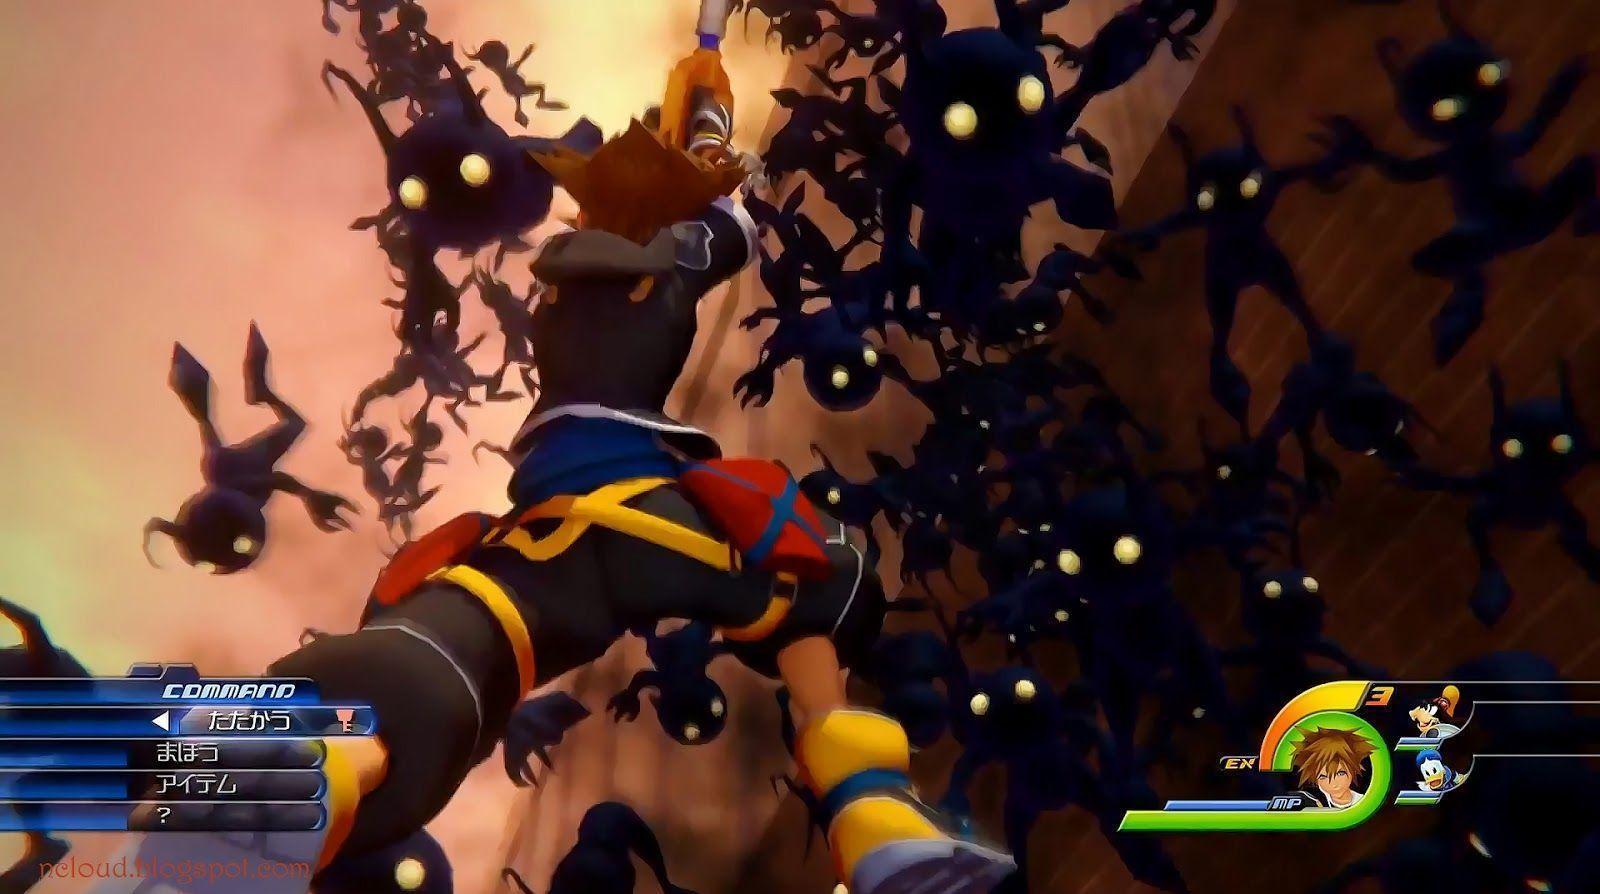 Kingdom Hearts 3 Wallpapers - Wallpaper Cave - 1600 x 894 jpeg 130kB